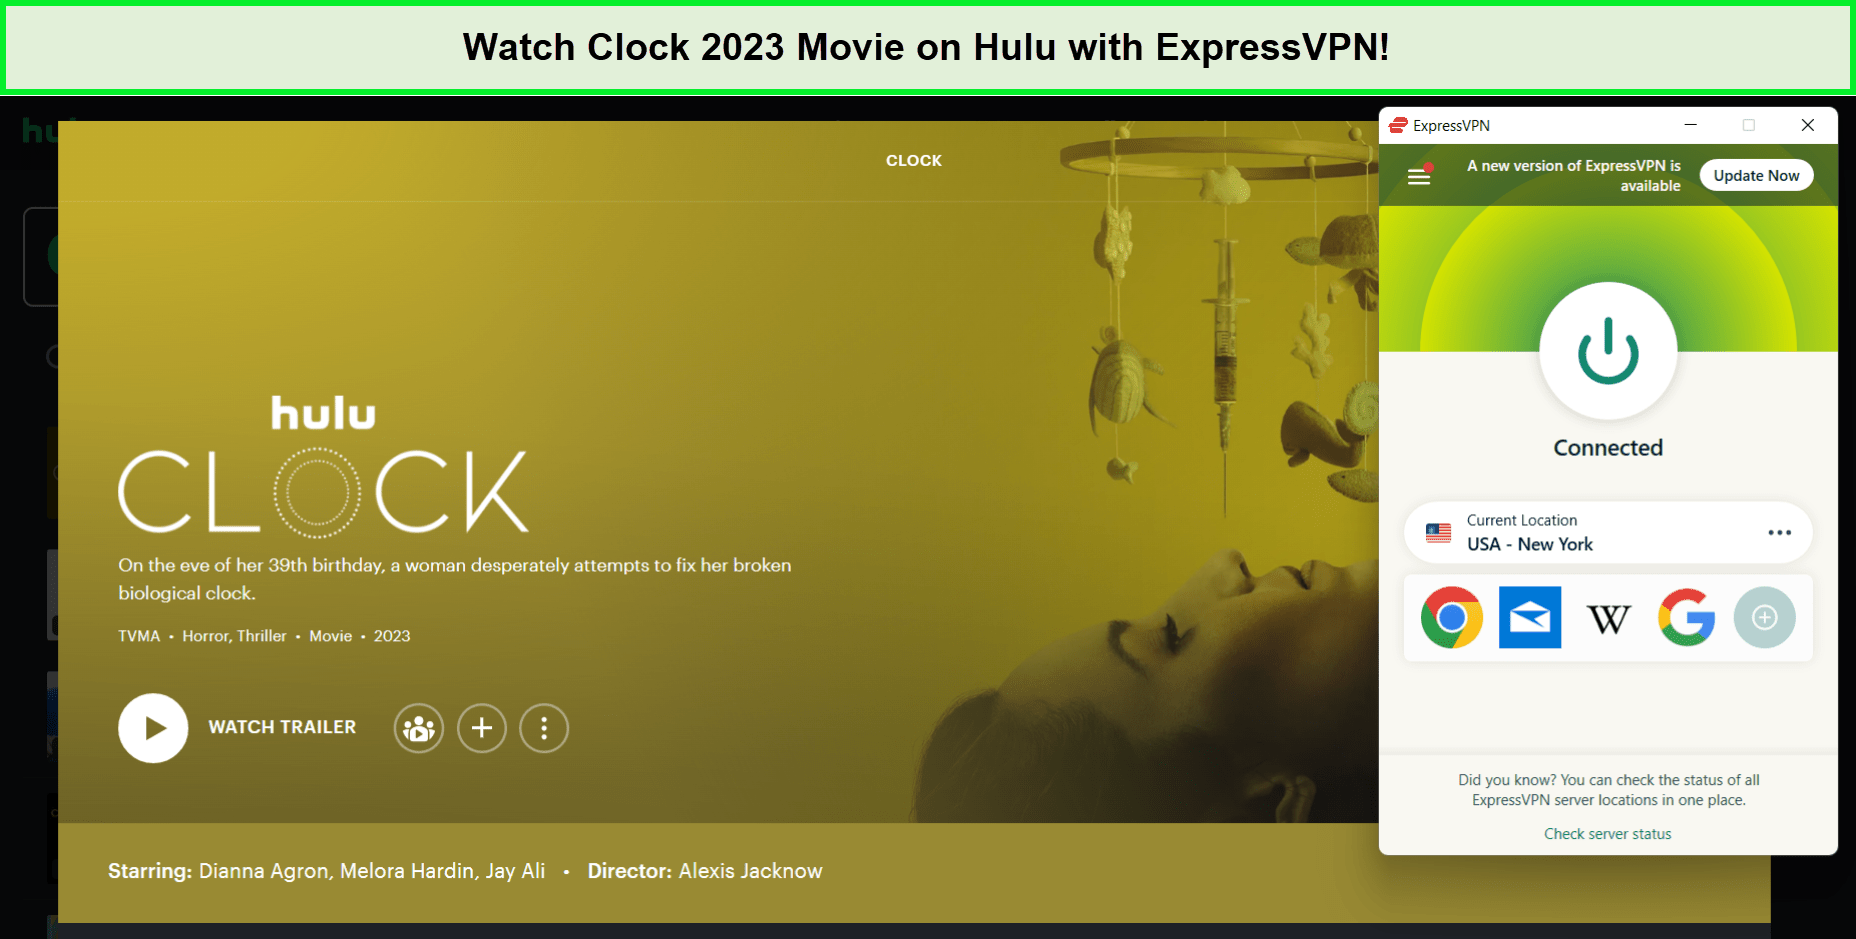 With-ExpressVPN-Watch-Clock-2023-Movie-on-Hulu-in-India